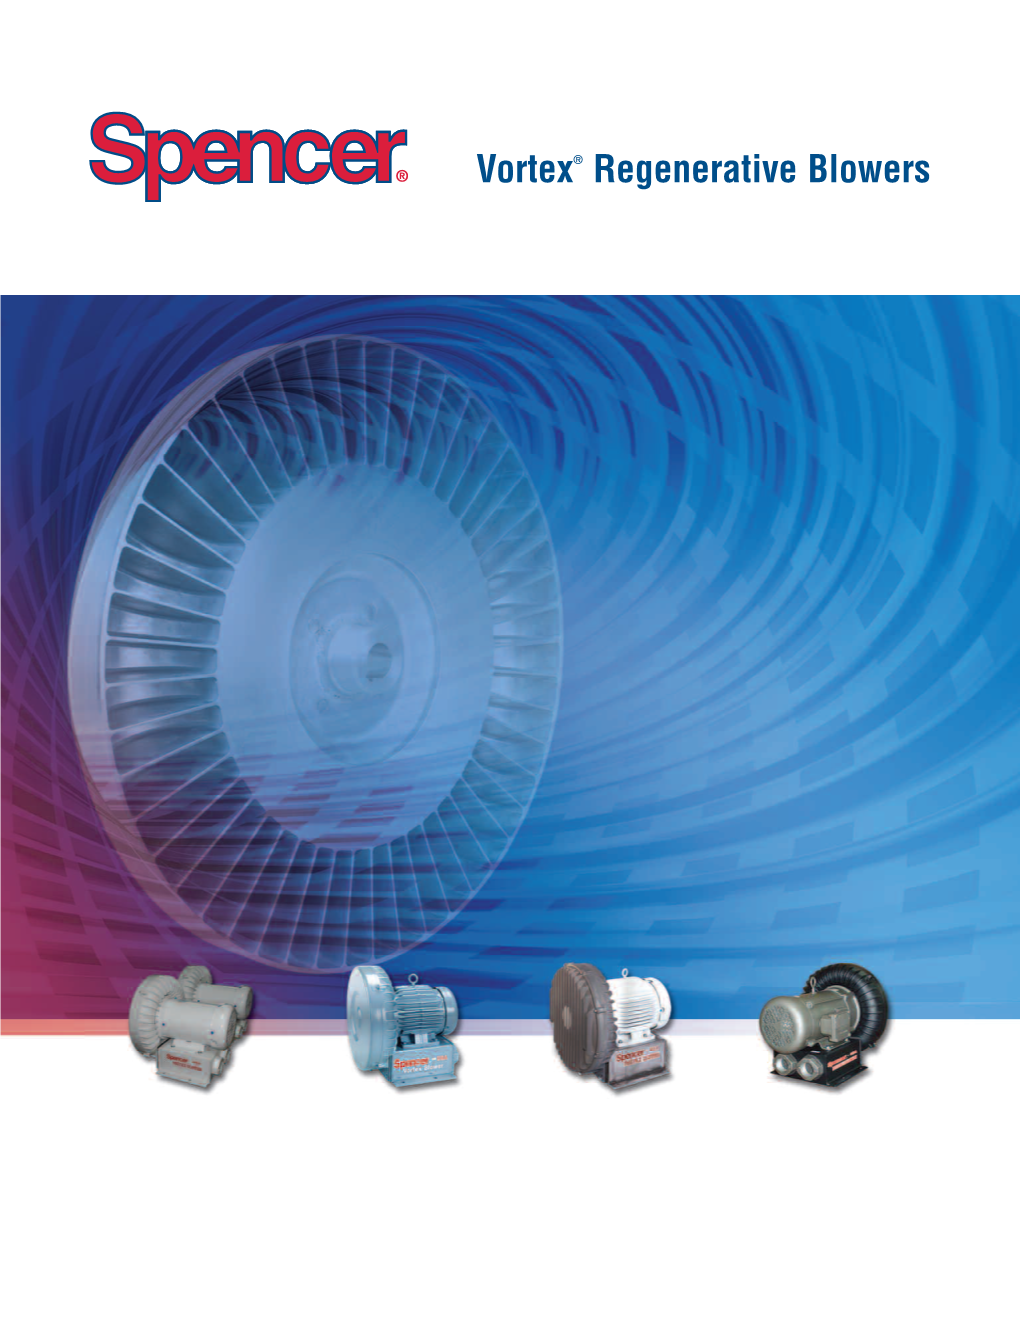 Vortex® Regenerative Blowers 2 Vortex® Regenerative Blowers Introduction